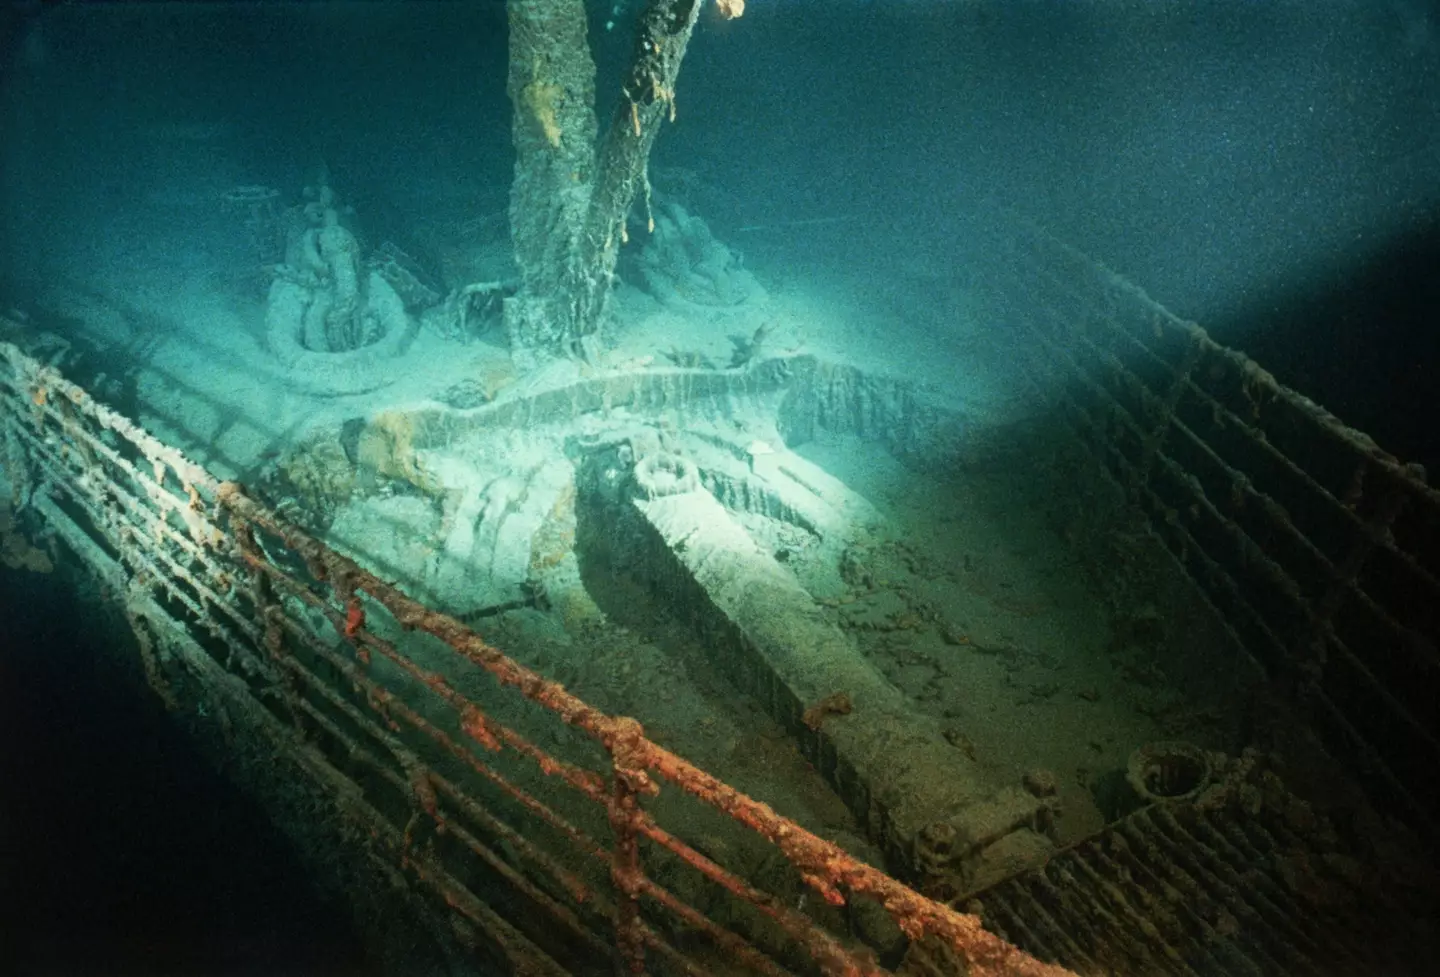 The RMS Titanic sunk in 1912.